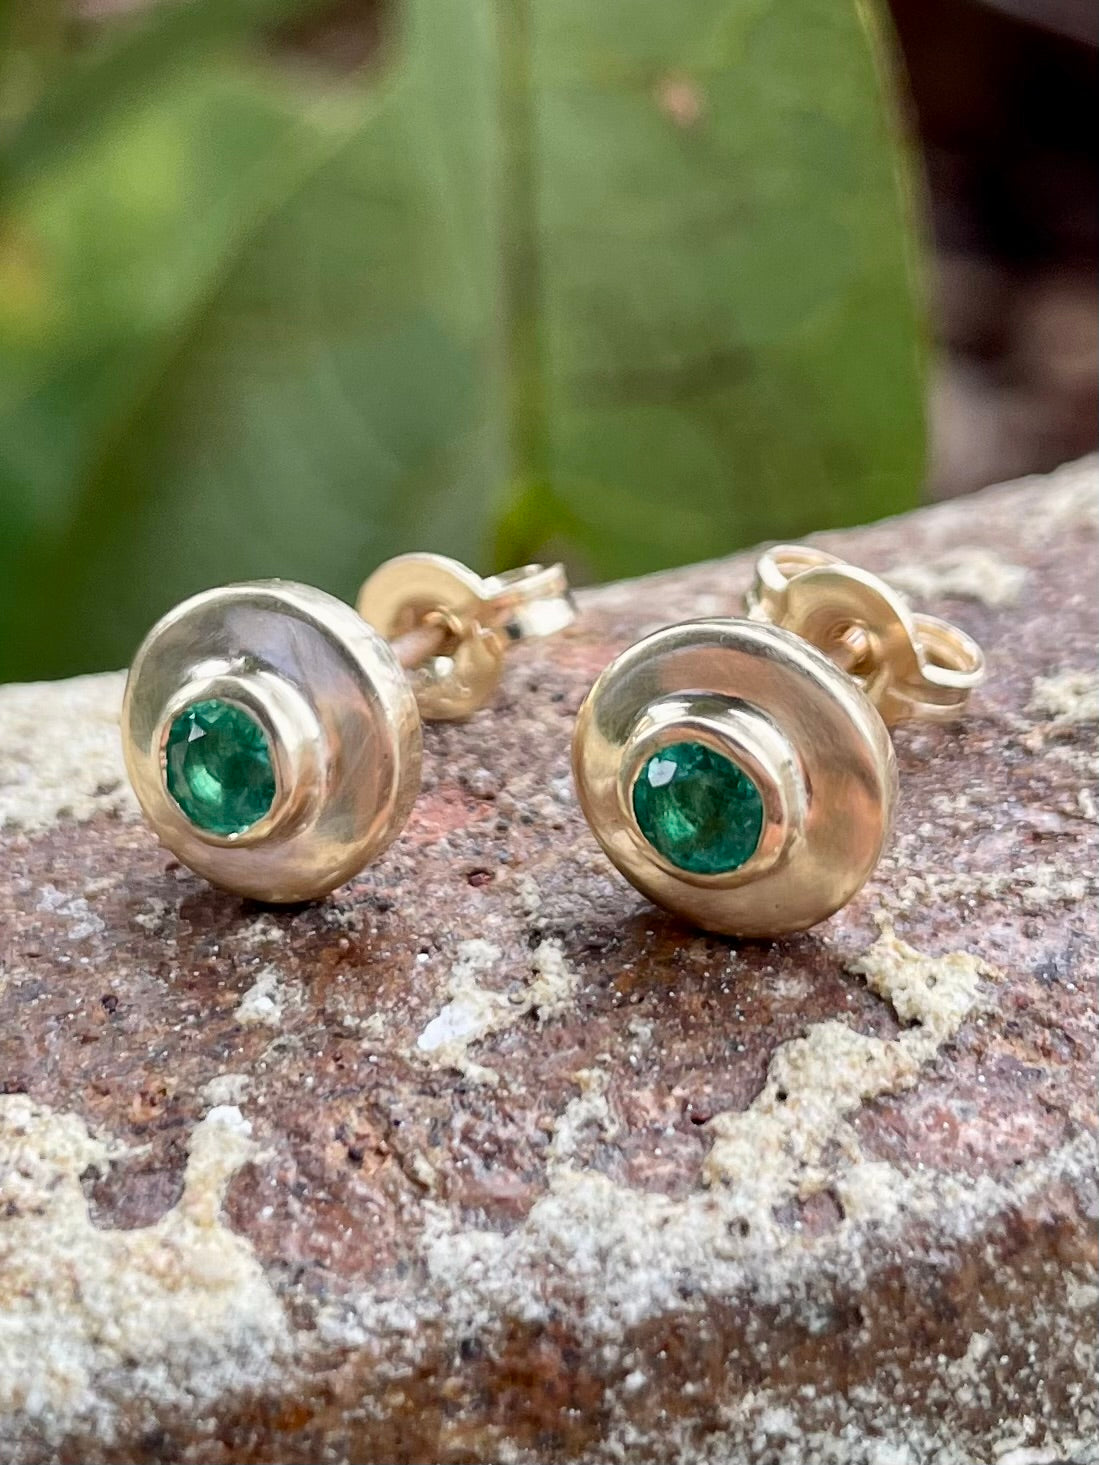 9ct Yellow Gold Emerald Stud Earrings